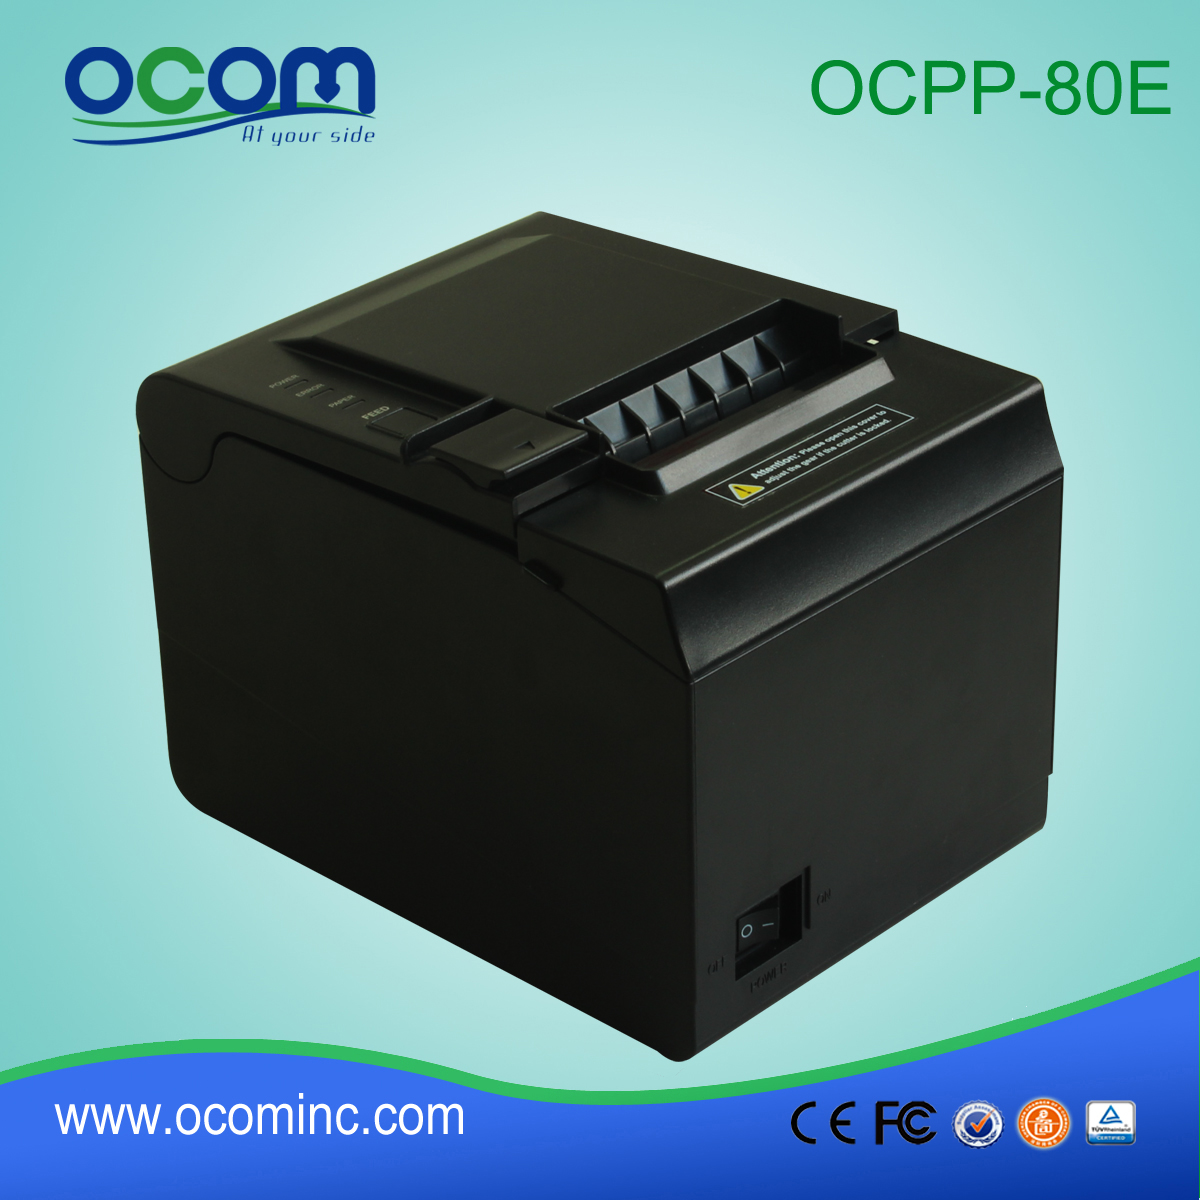 2015 Date thermique POS 80 Imprimante (OCPP-80E)